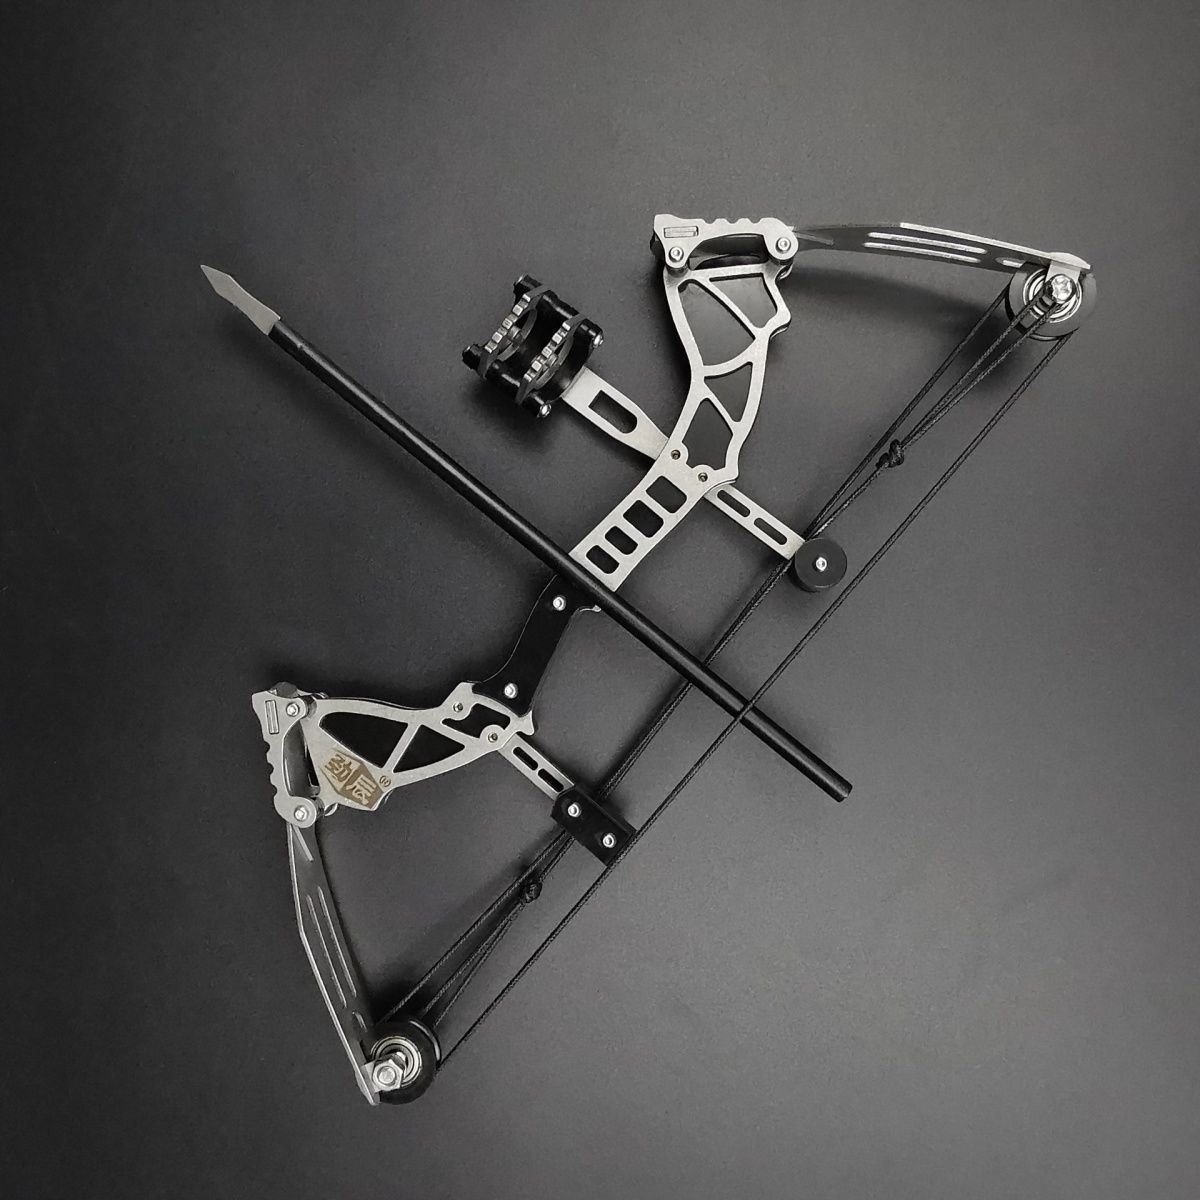 High Power Compound Bow Set Shooting Bow Arrow Recreational Decompression Slider